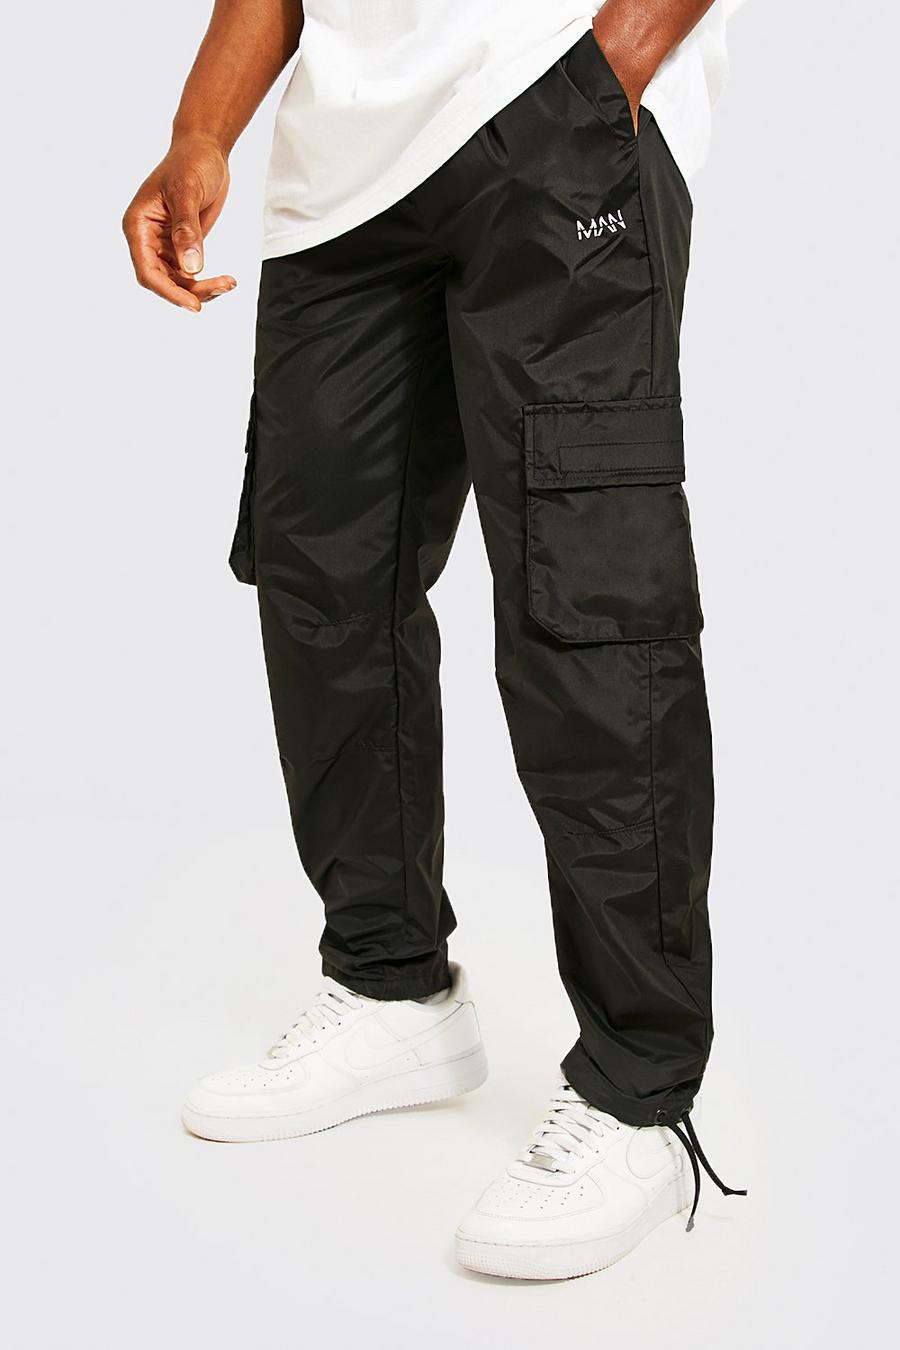 https://media.boohoo.com/i/boohoo/amm06437_black_xl/male-black-elastic-waist-straight-fit-man-shell-cargo-trouser/?w=900&qlt=default&fmt.jp2.qlt=70&fmt=auto&sm=fit